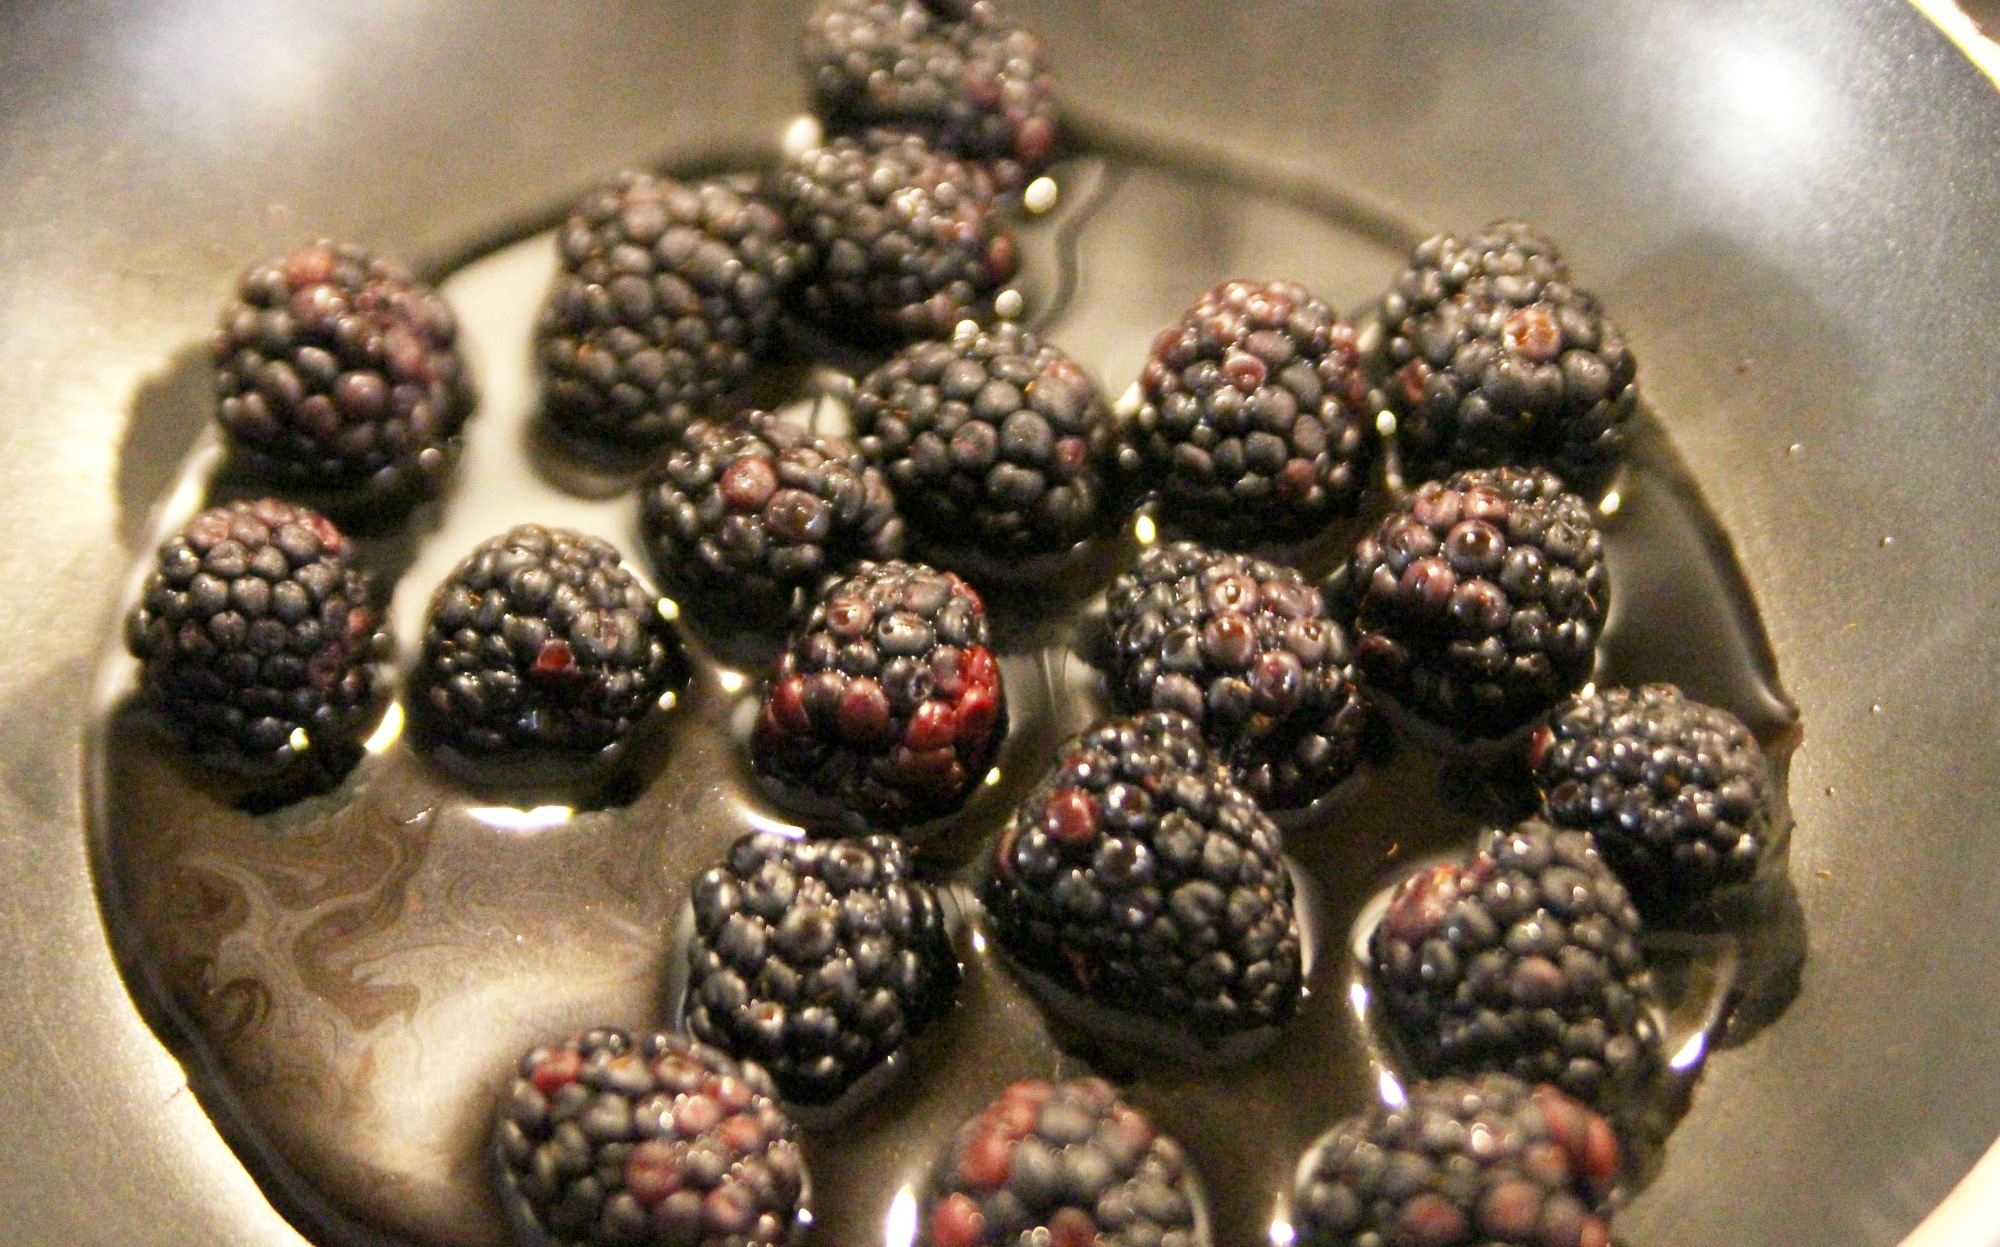 vinegar-blackberries